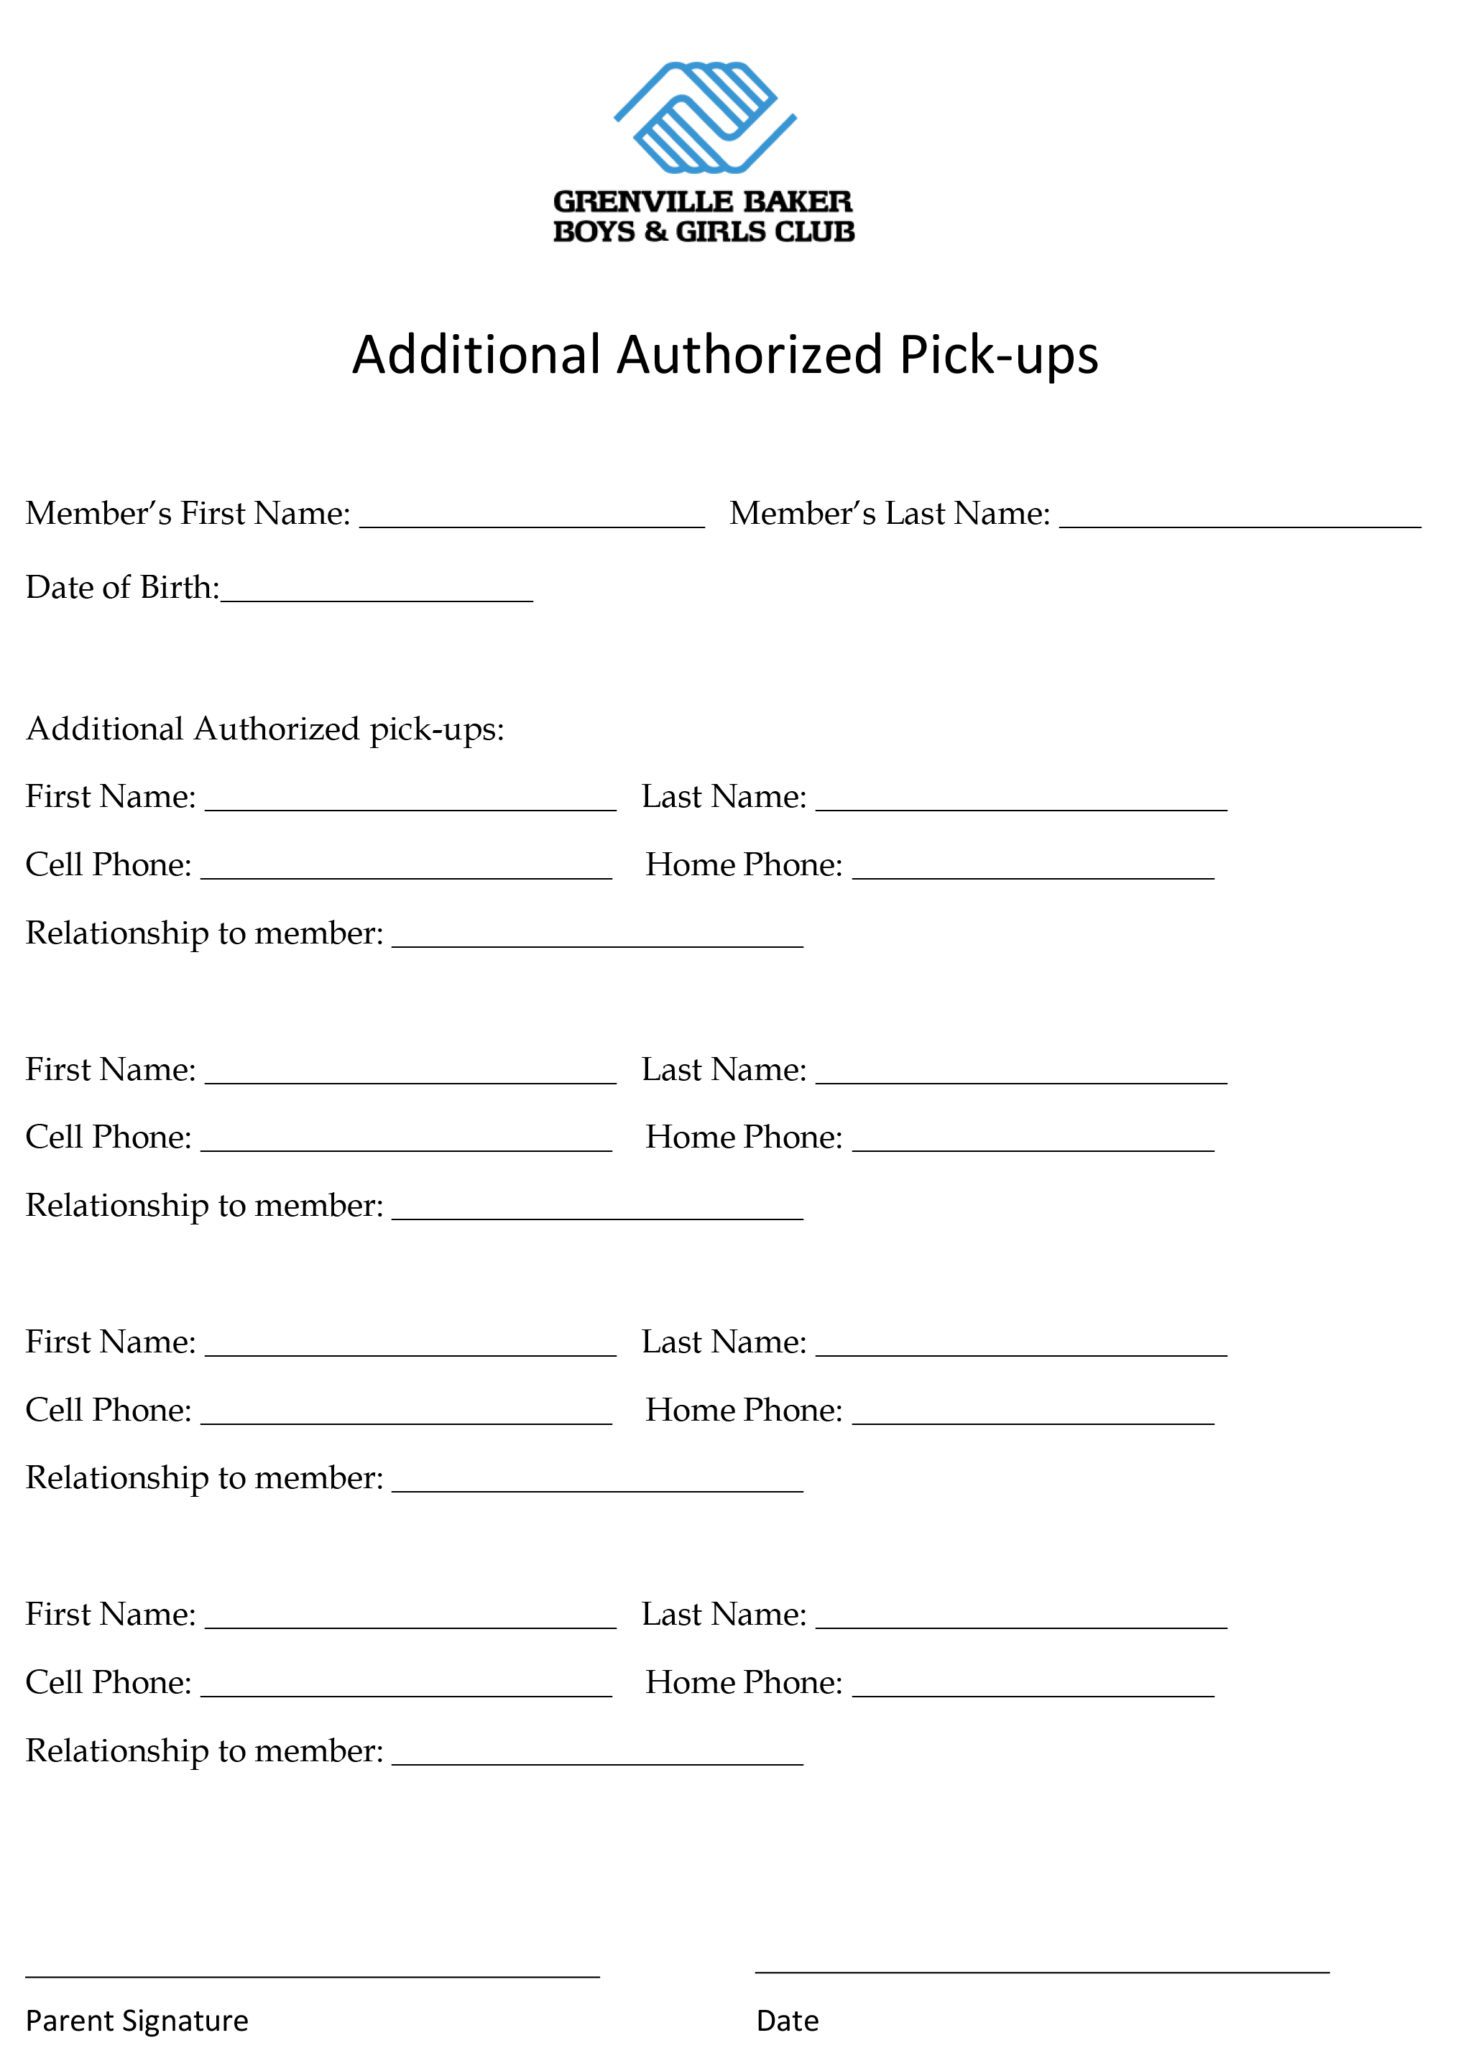 Authorized pick-ups